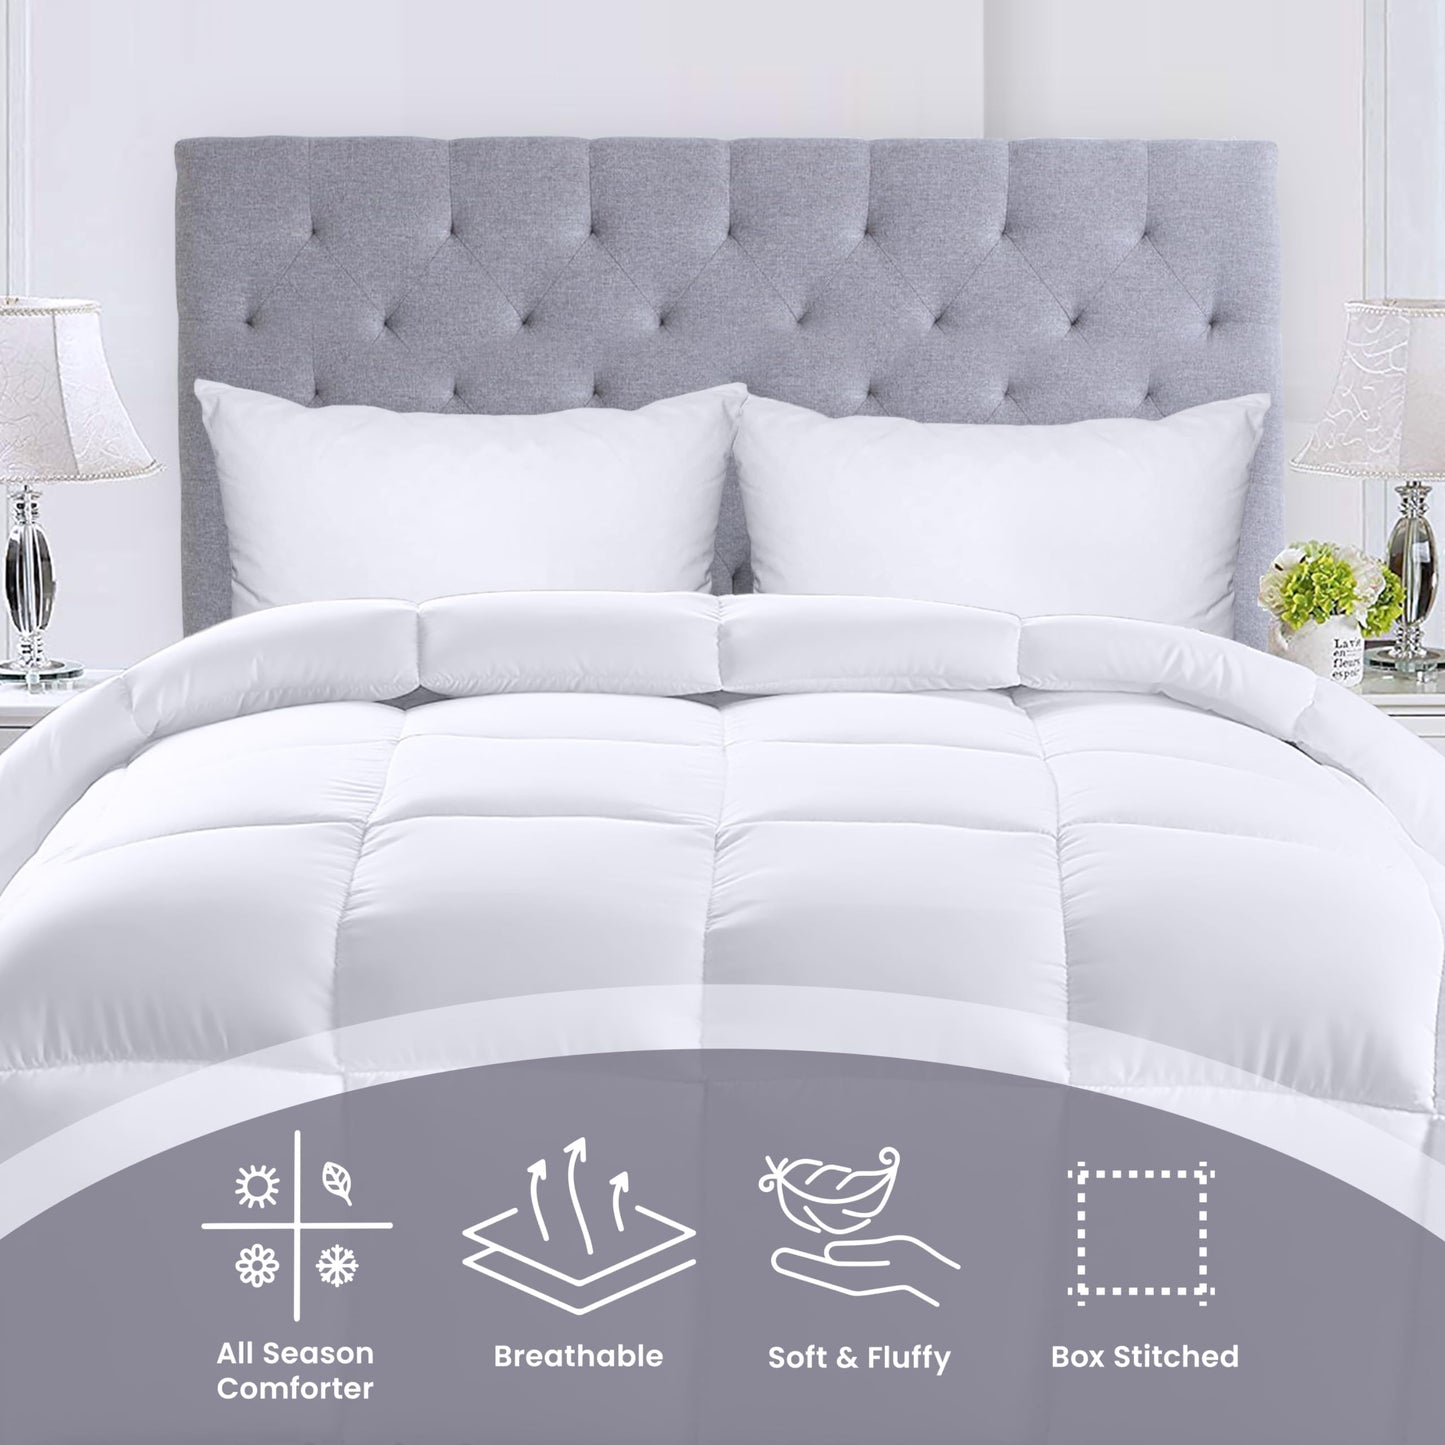 Utopia Bedding Comforter – All Season Comforter King Size – White Comforter King - Plush Siliconized Fiberfill - Box Stitched